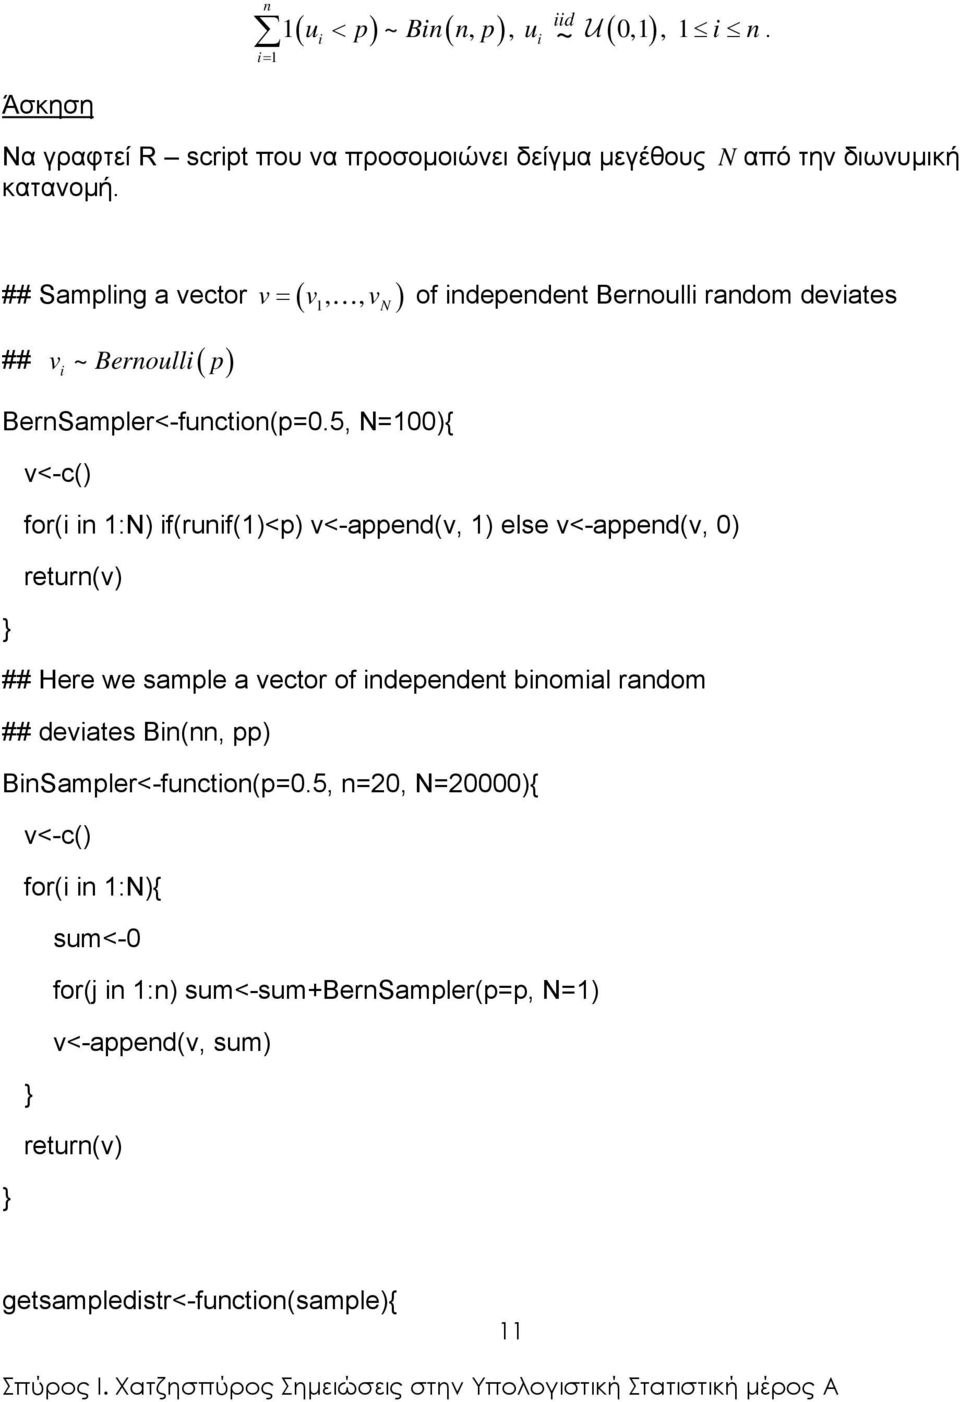 5, N=00){ v<-c() for(i i :N) if(ruif()<p) v<-apped(v, ) else v<-apped(v, 0) retur(v) ## Here we sample a vector of idepedet biomial radom ##